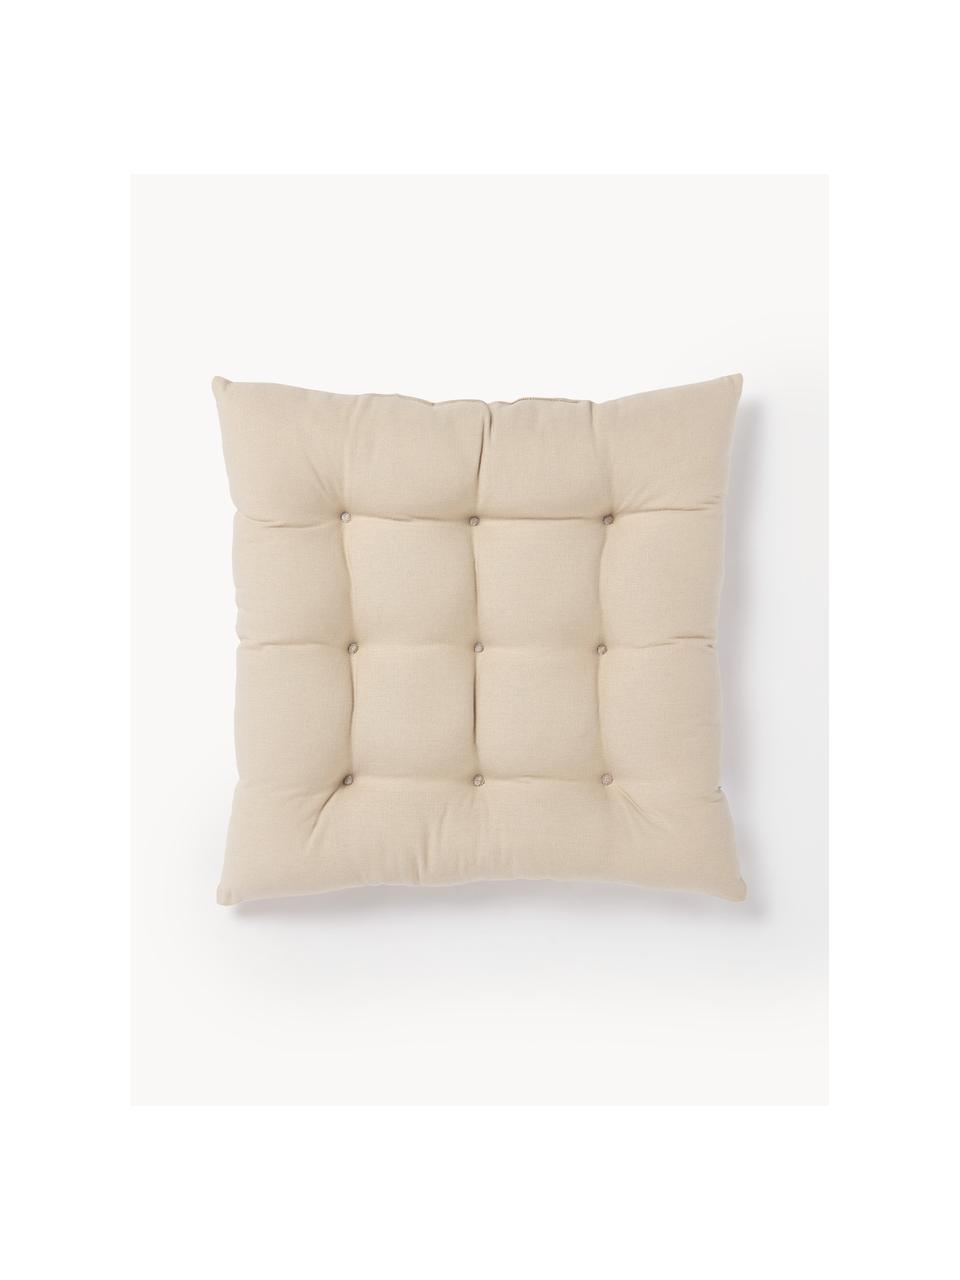 Cojines de asiento Ava, 2 uds., Funda: 100% algodón, Greige, An 40 x L 40 cm